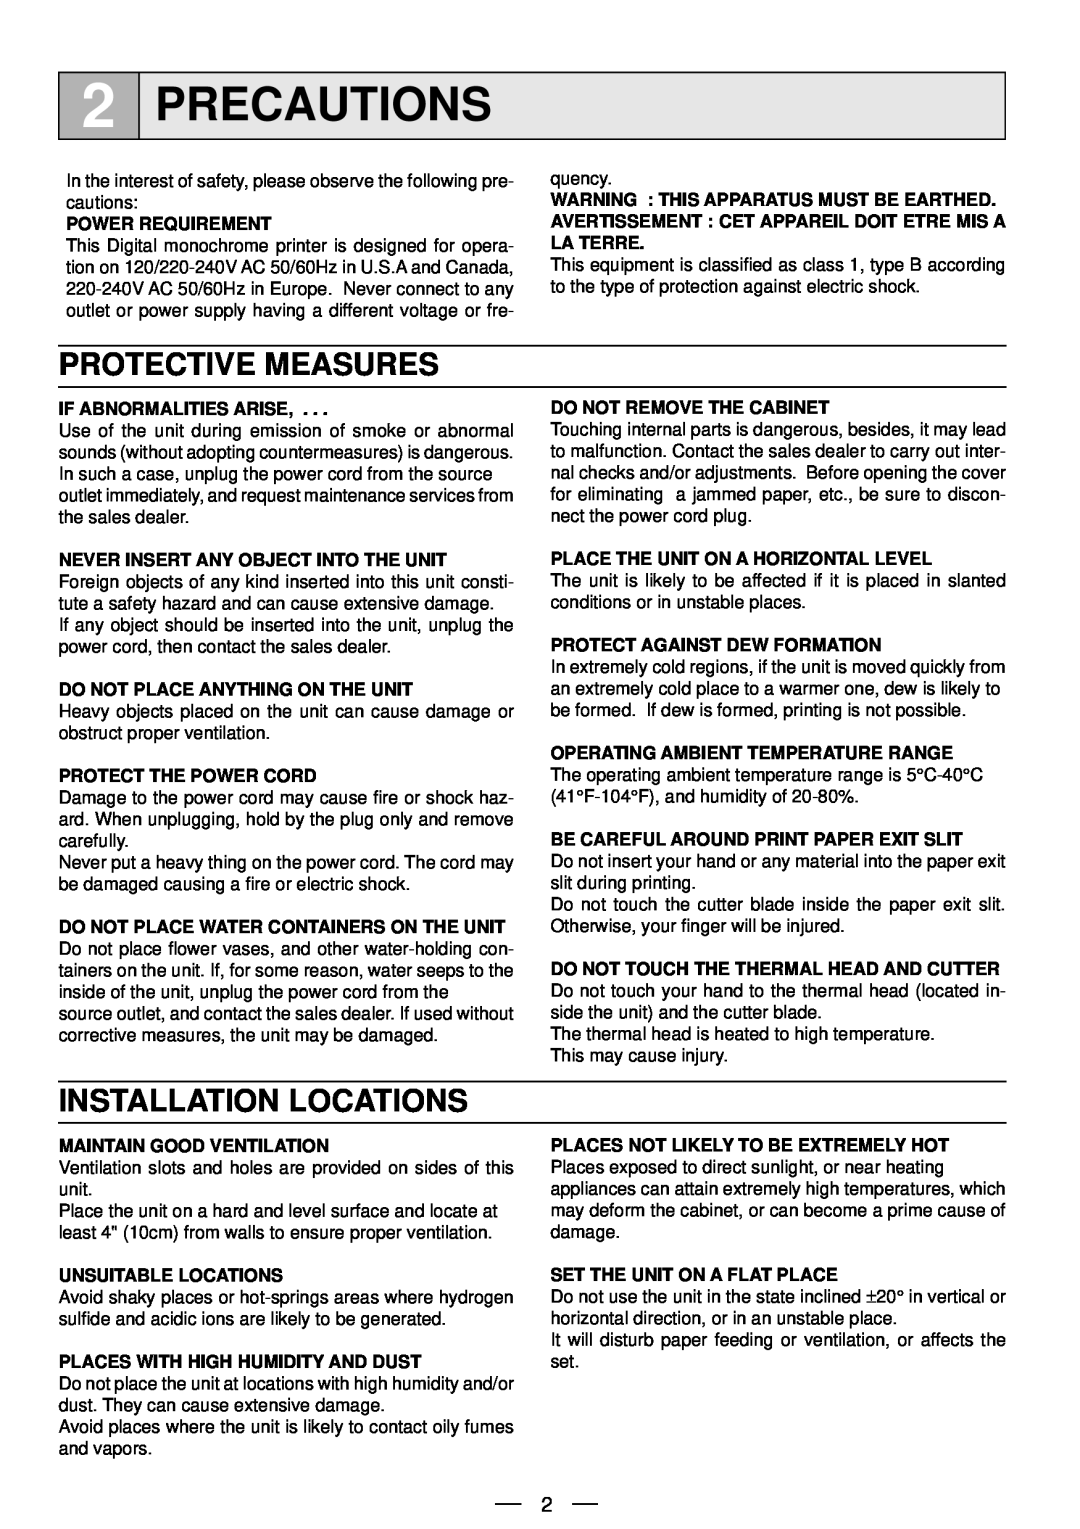 Mitsubishi Electronics P91DW operation manual Precautions, Protective Measures, Installation Locations 